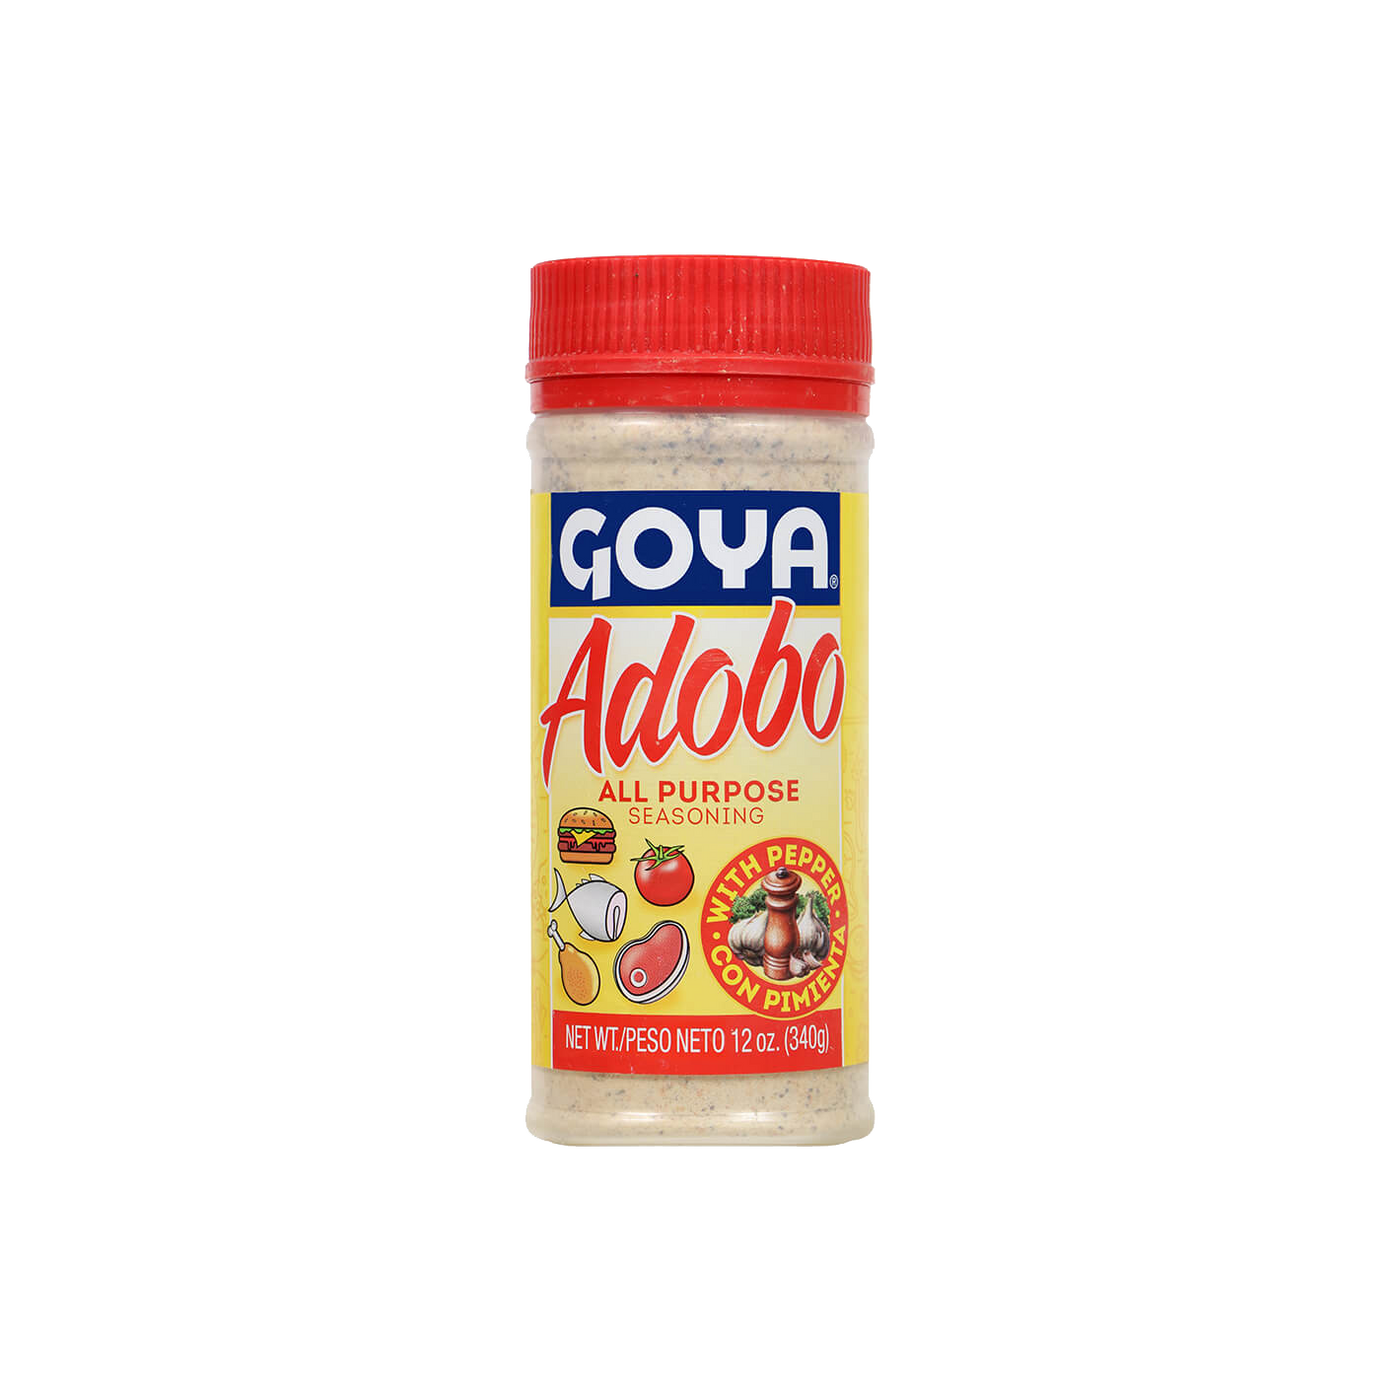   Goya Adobo Seasoning With Pepper